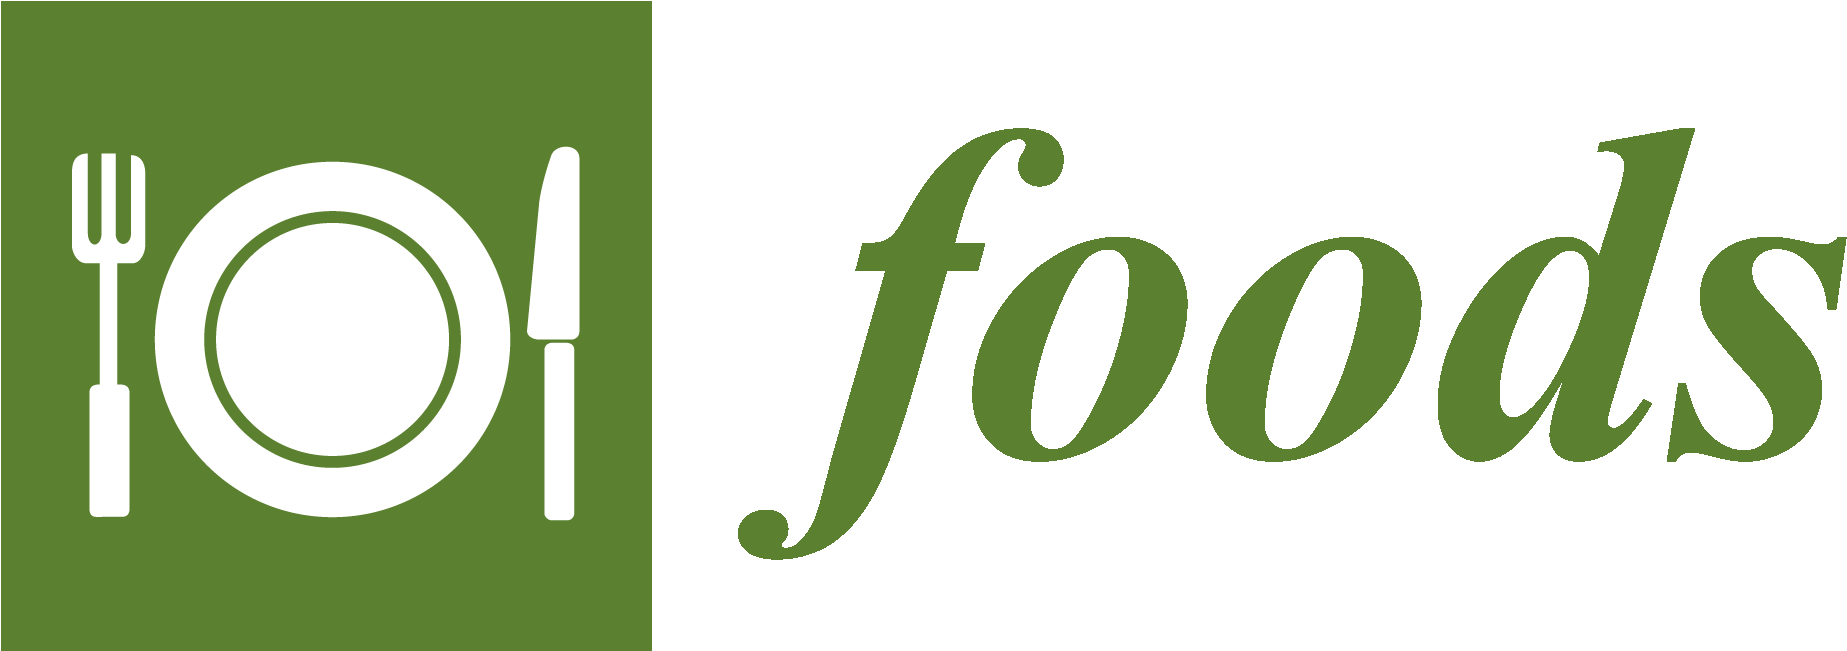 Food text logo. Food текст с прозрачным фоном. Логотип на прозрачном фоне text food PNG. Mdpi logo. Фуд текст